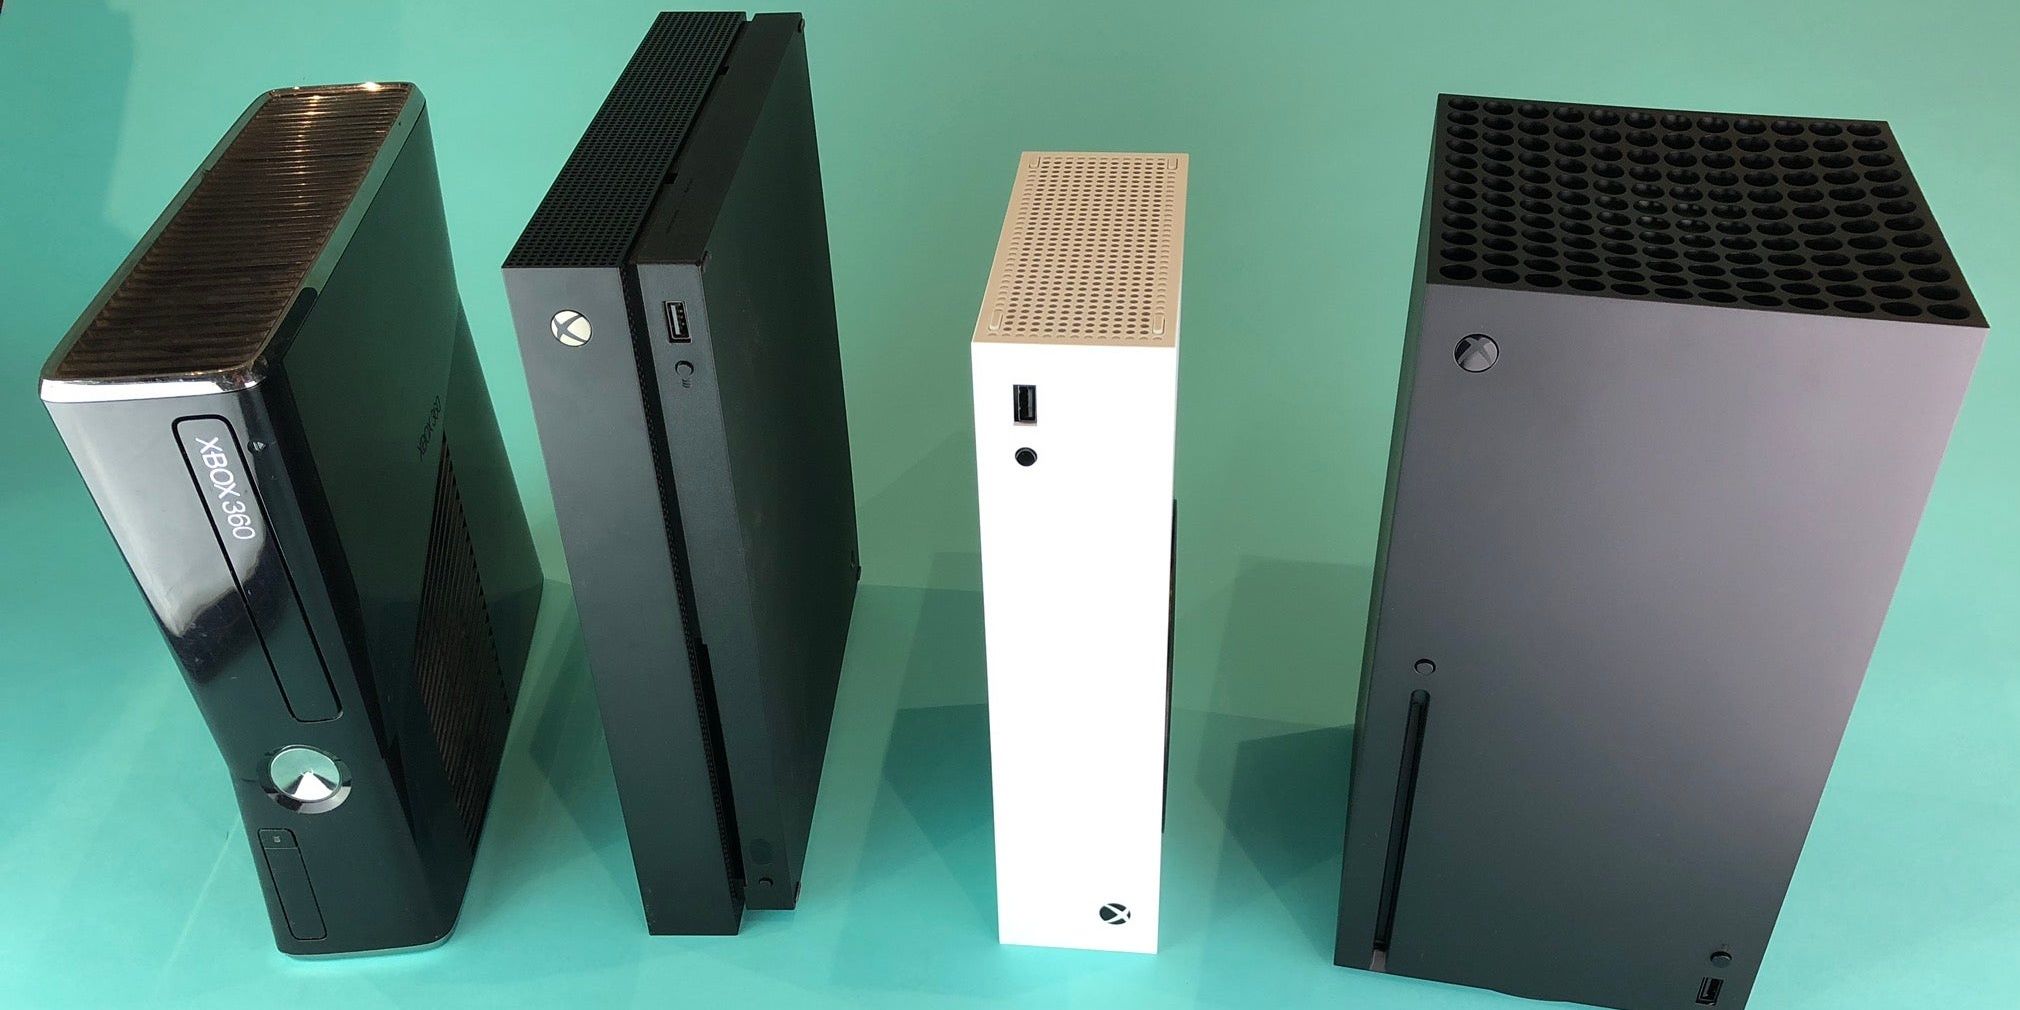 Xbox Series S, Series X, One X, and 360 Slim